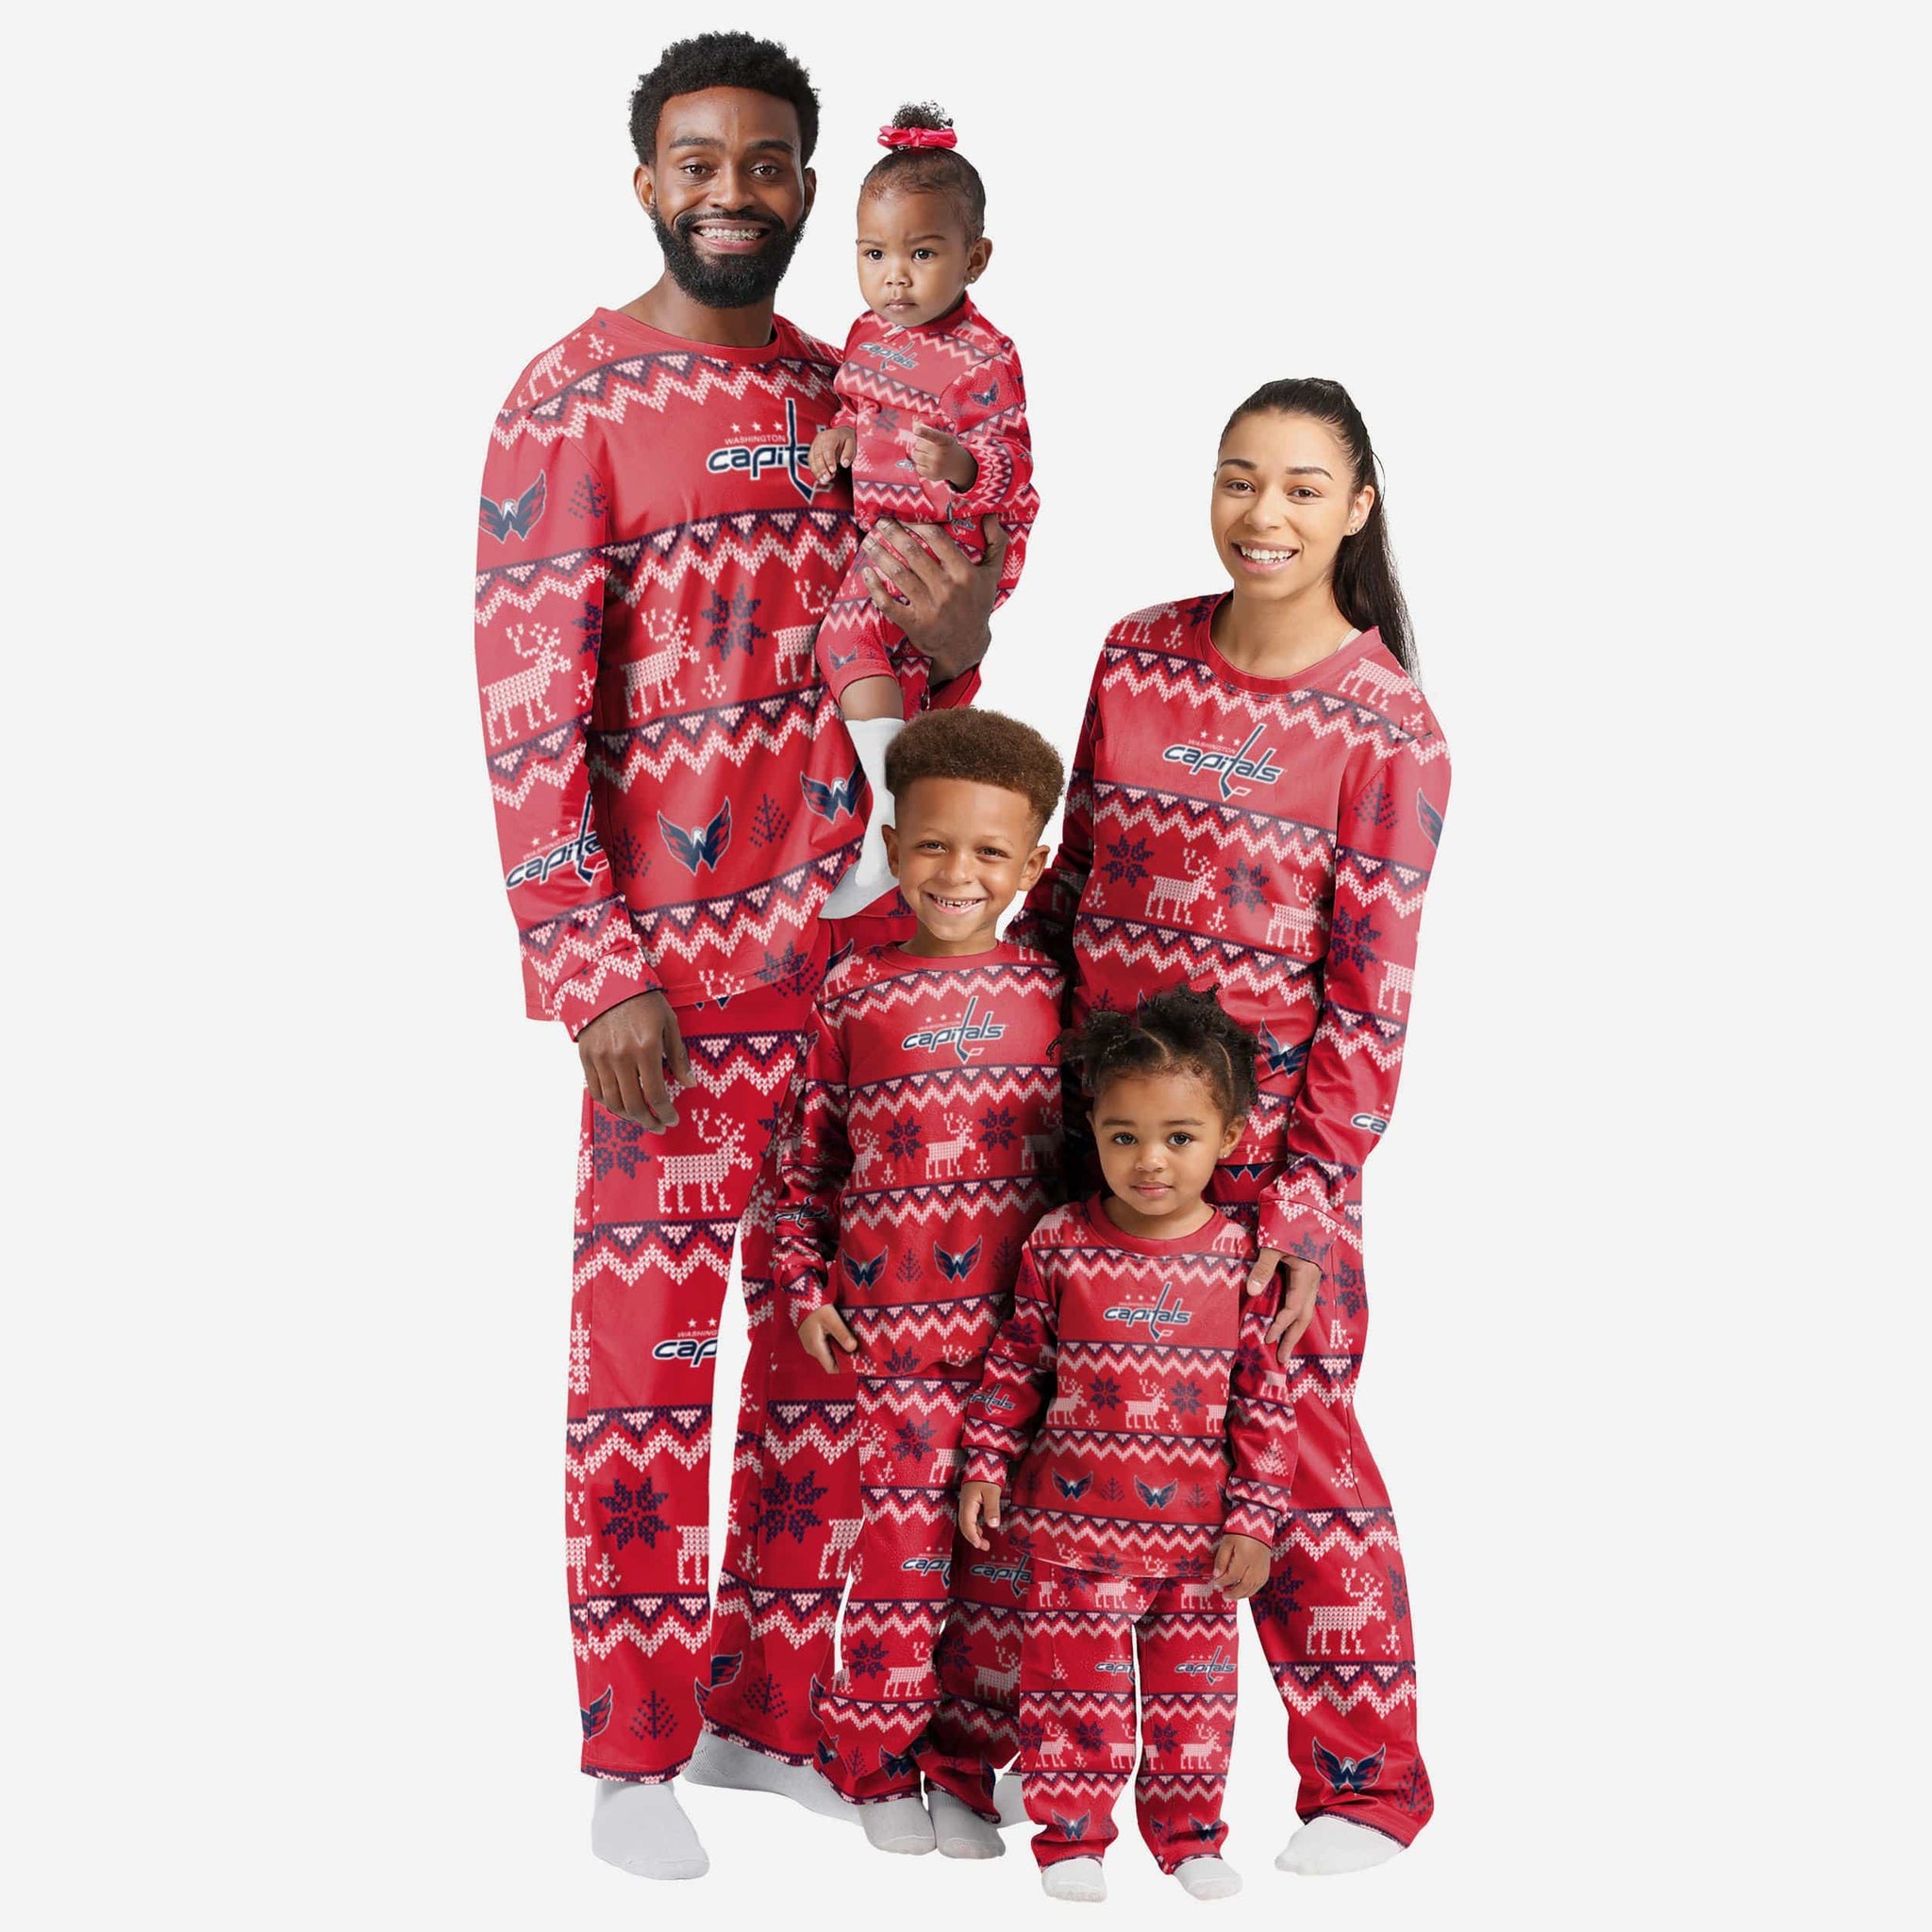 Pittsburgh Penguins Toddler Family Holiday Pajamas FOCO